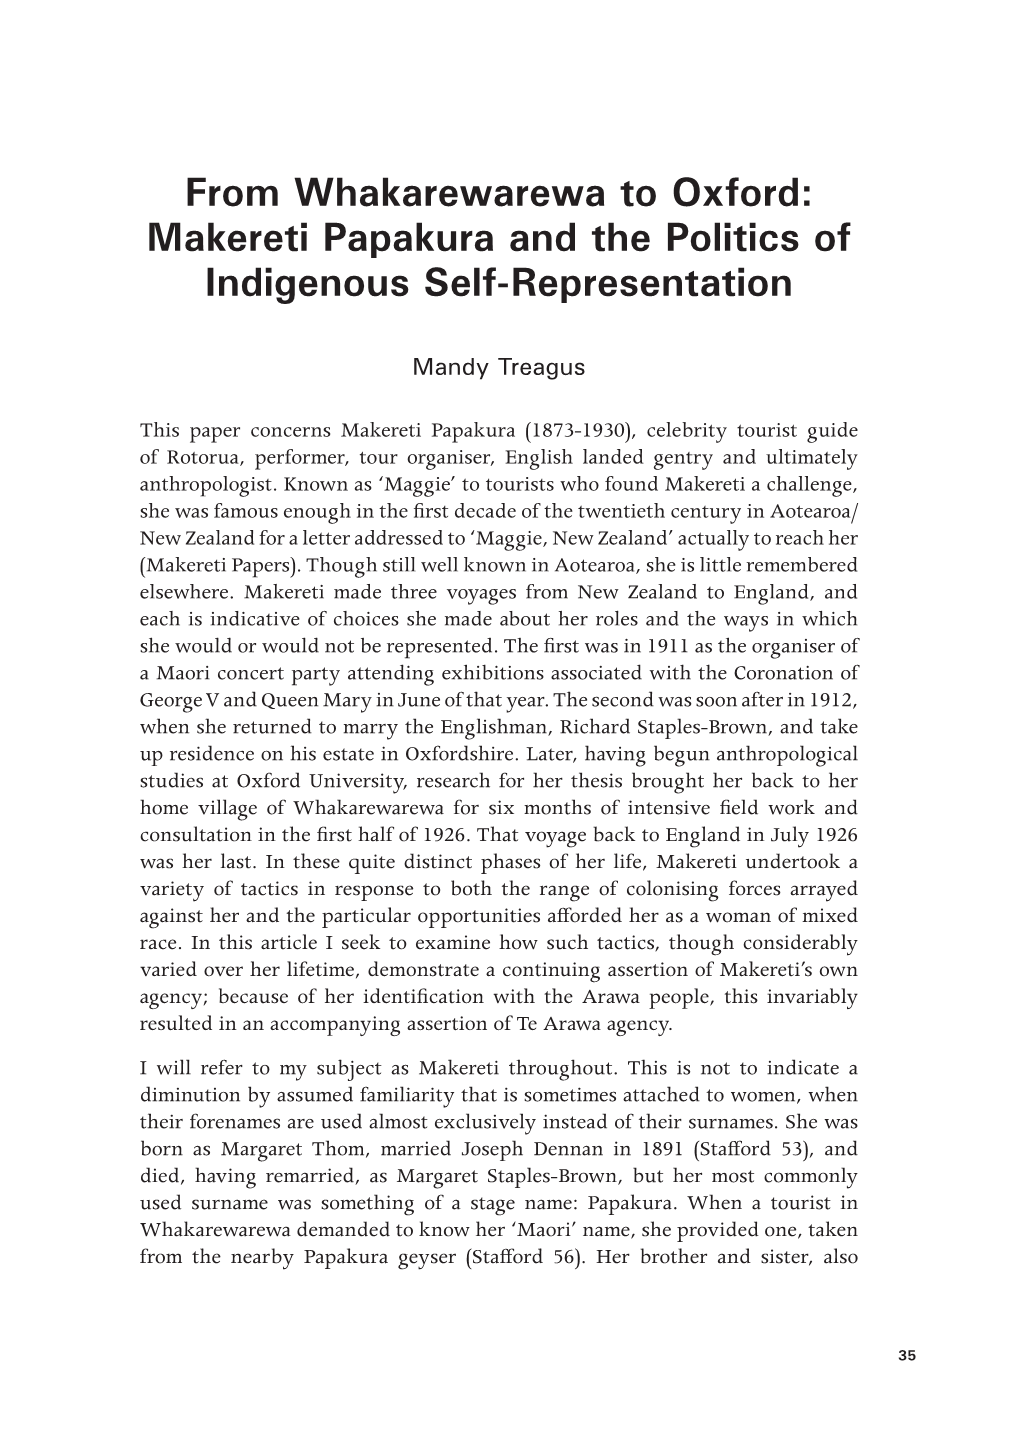 From Whakarewarewa to Oxford: Makereti Papakura and the Politics of Indigenous Self-Representation